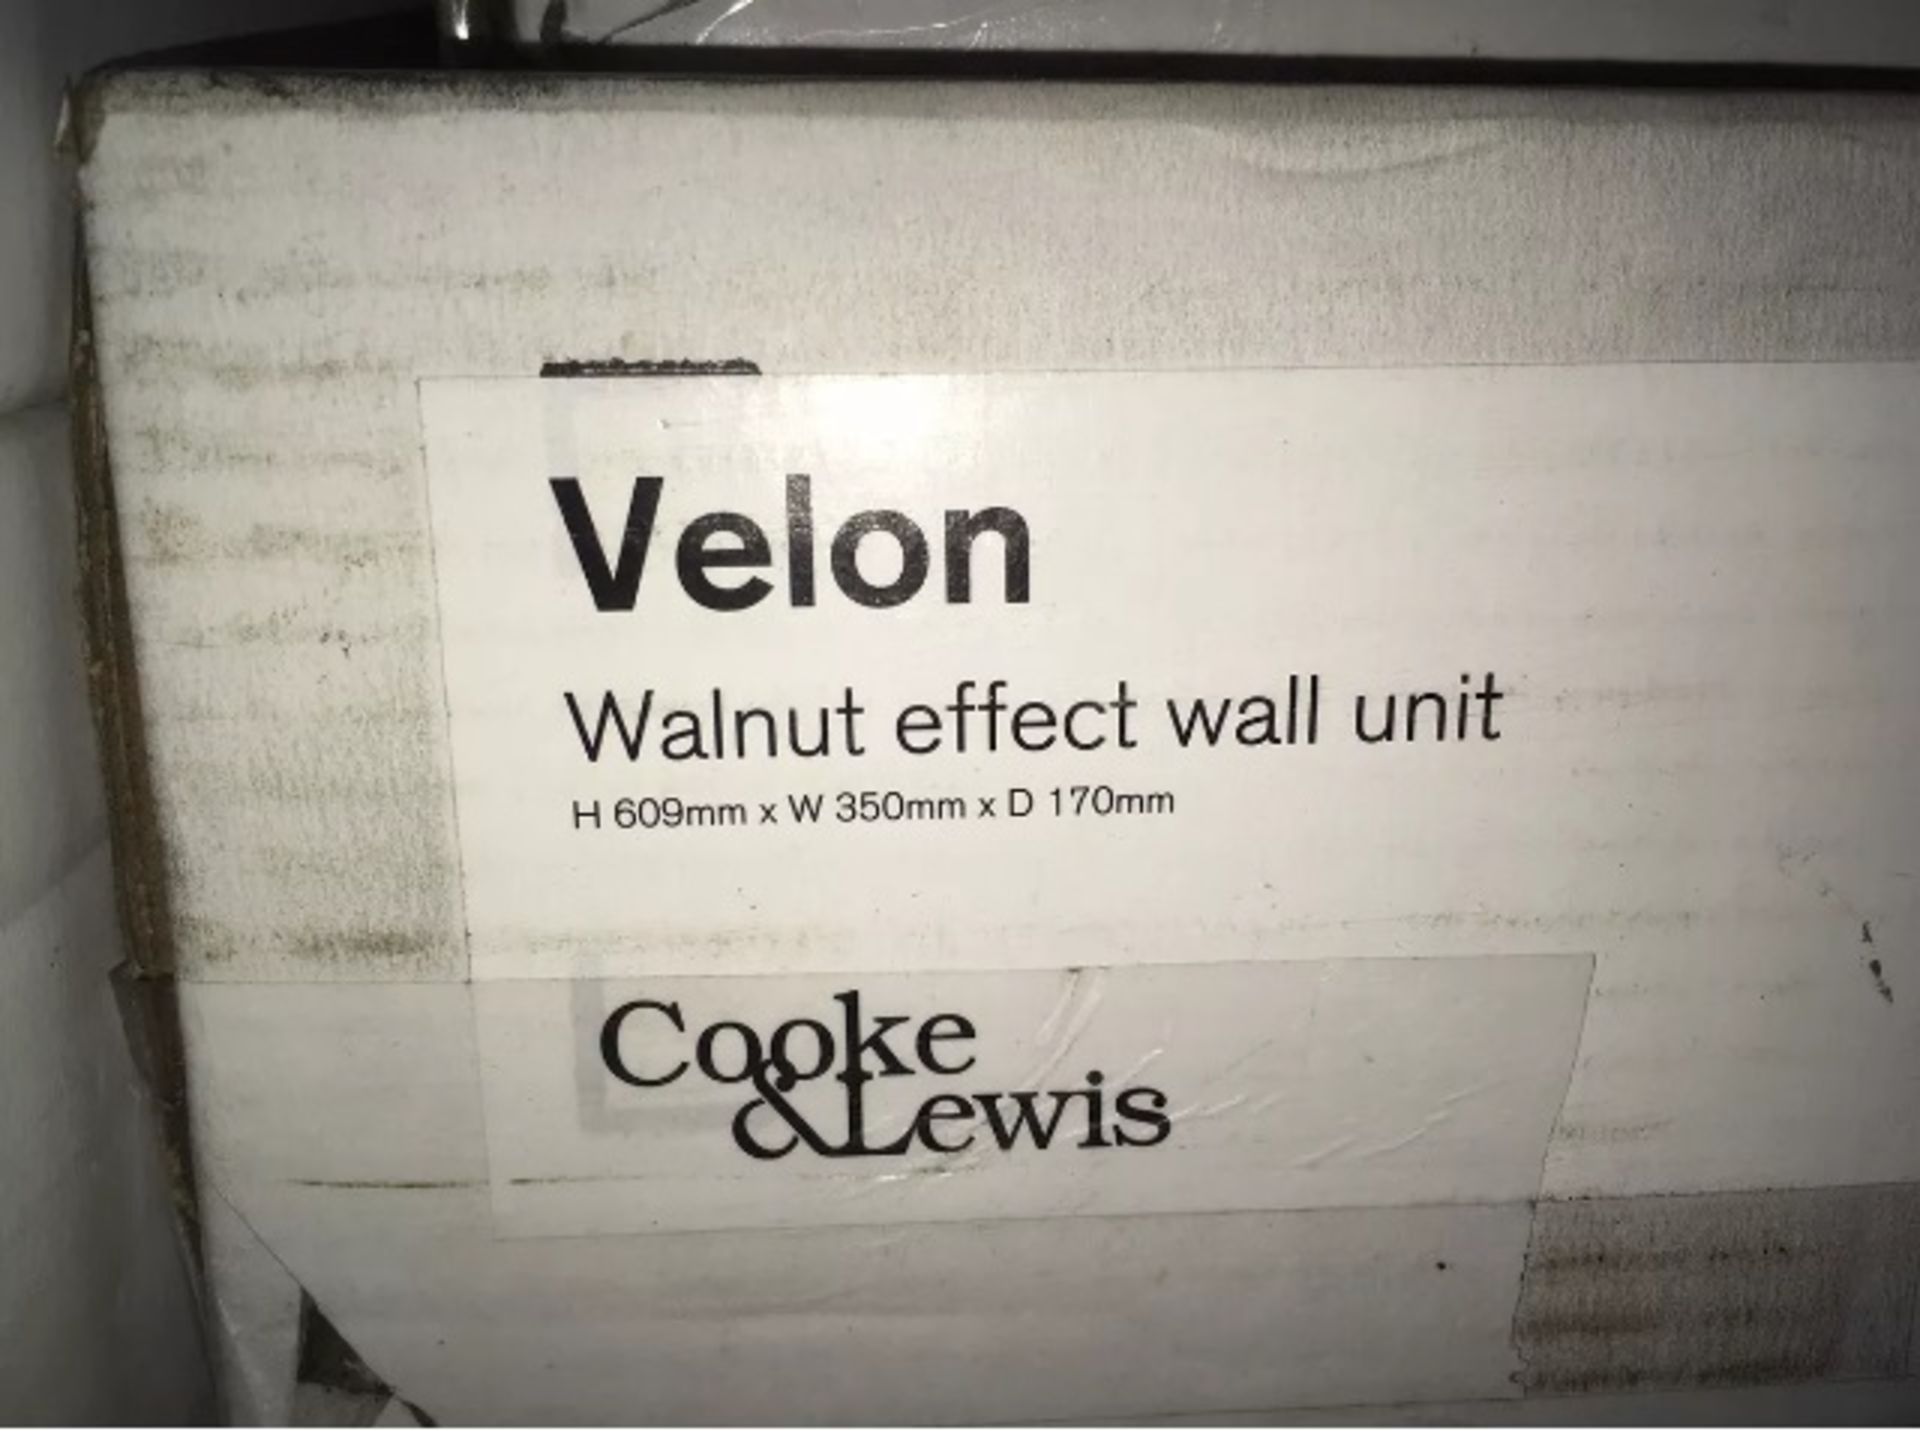 1 x Velon Walnut Effect Wall Unit (Brand New & Boxed) - Image 3 of 3